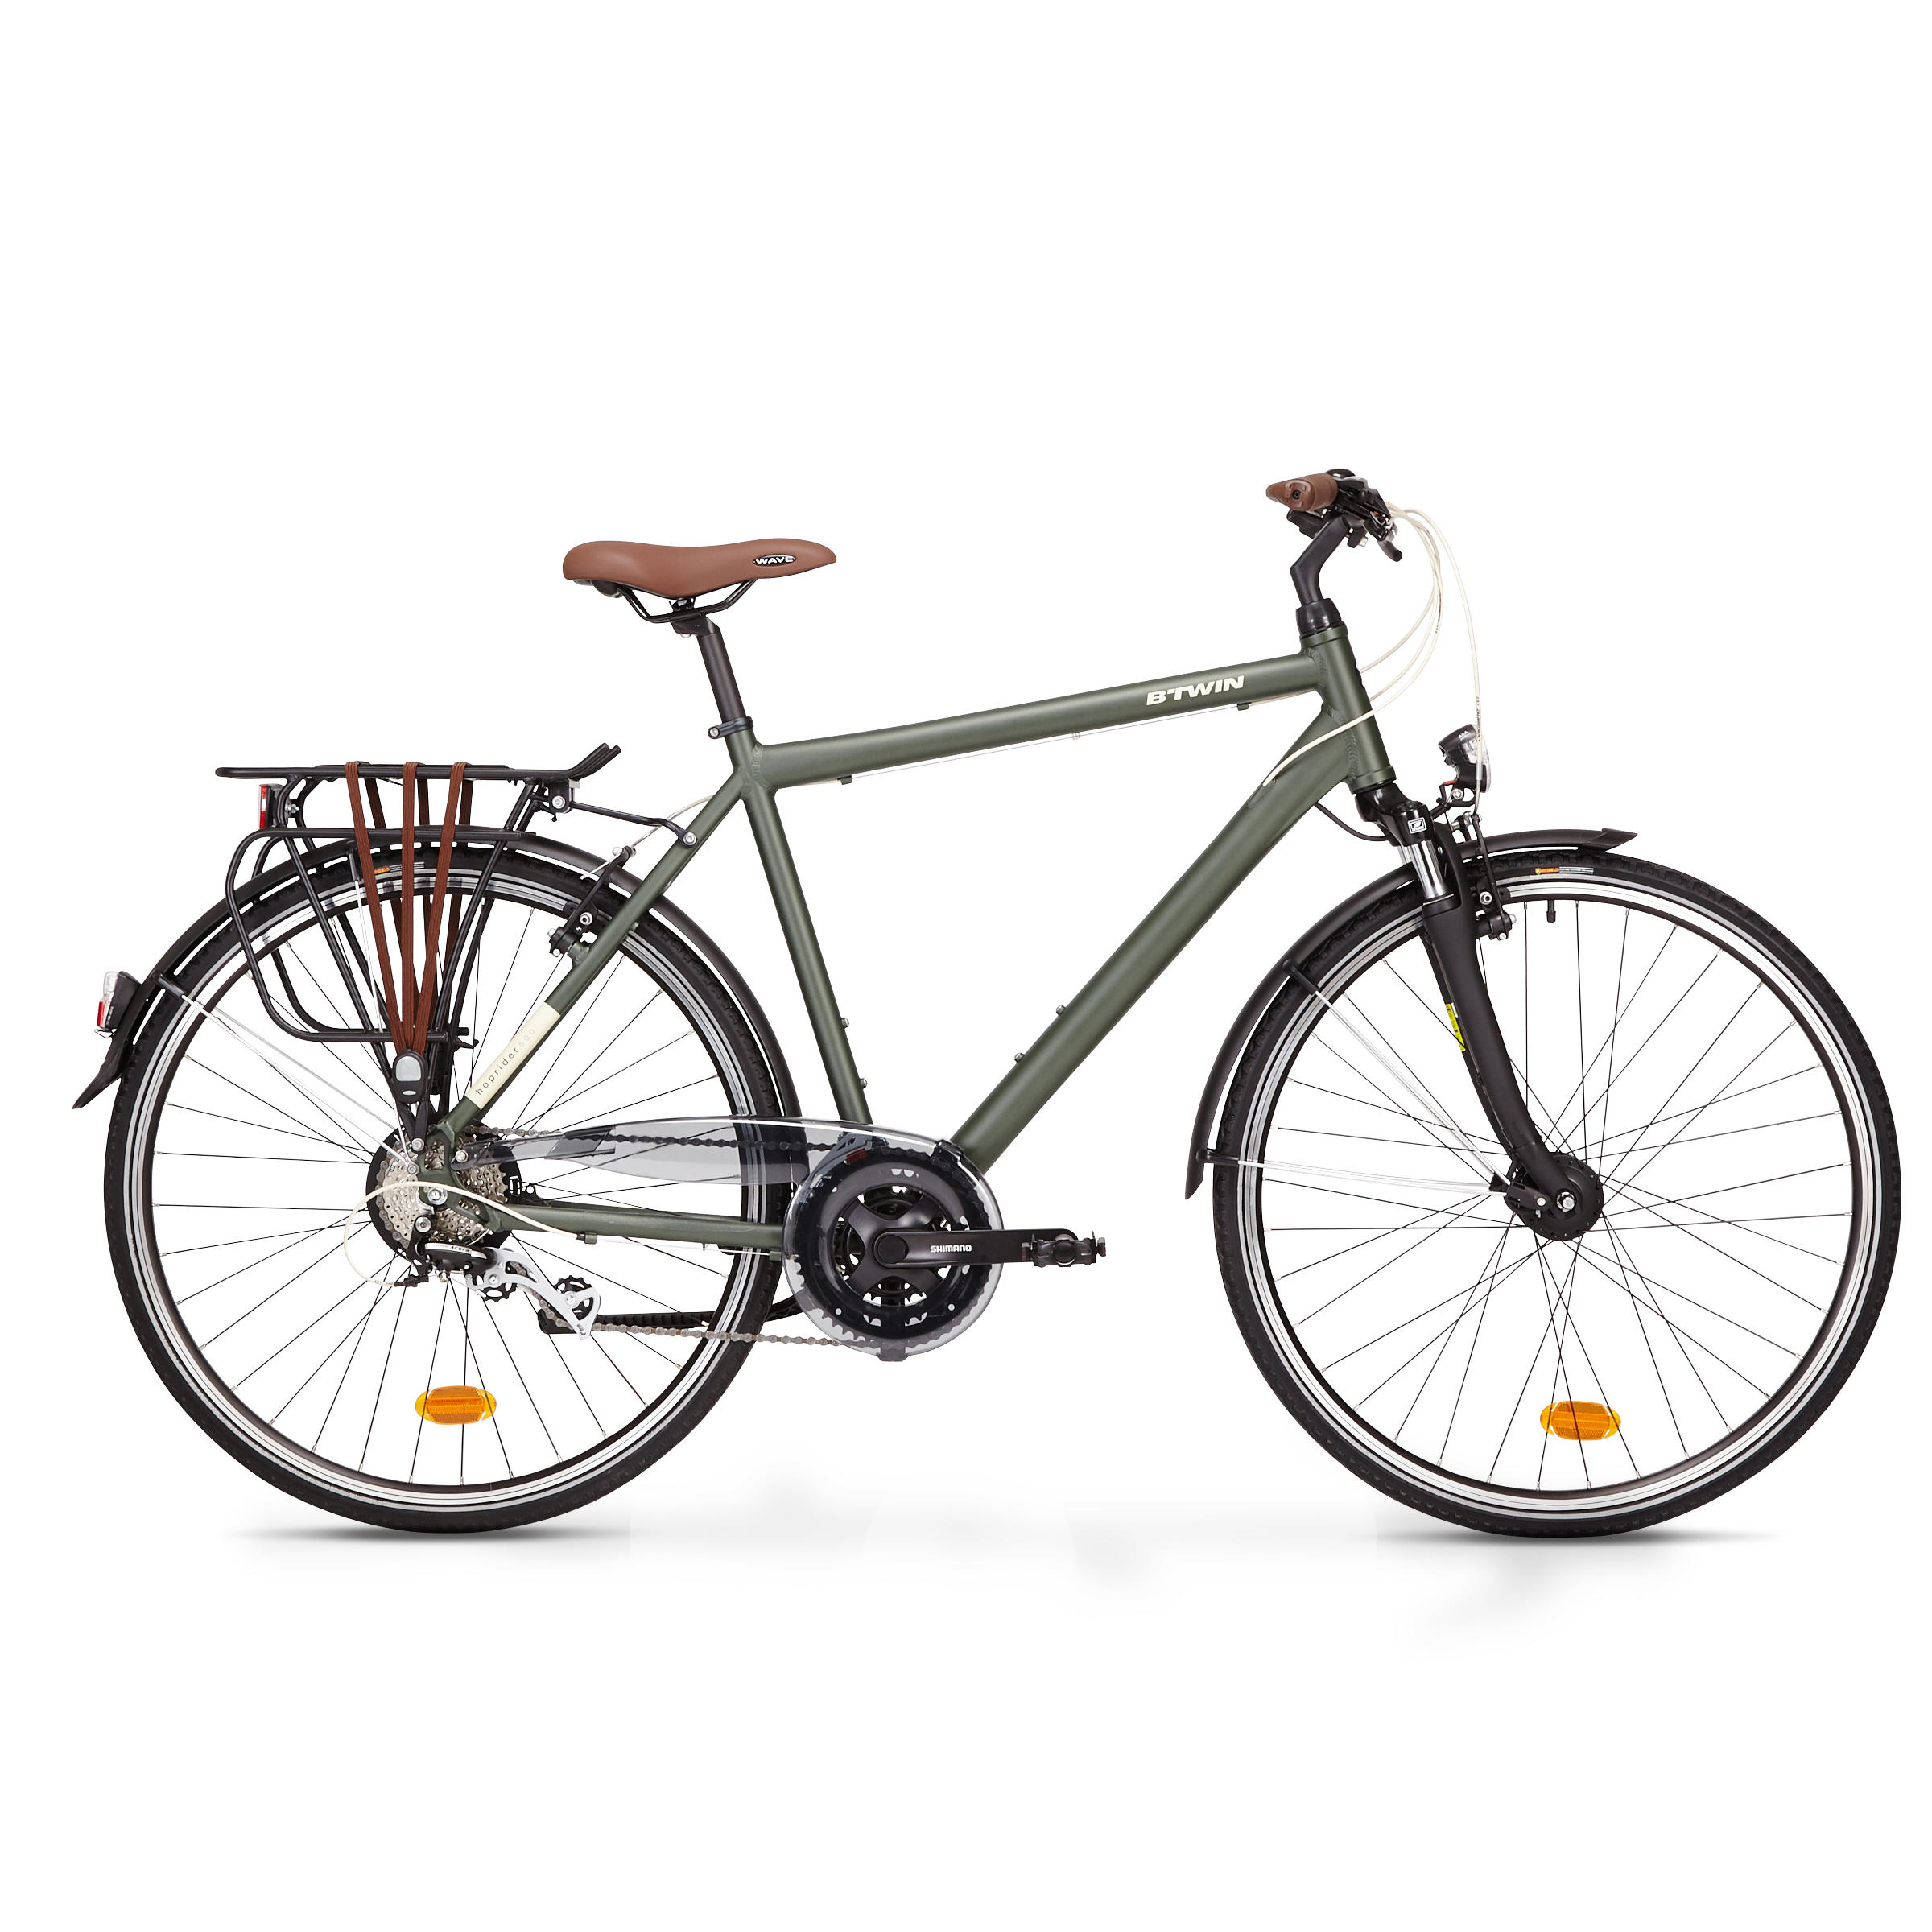 Hoprider 500 Long Distance City Bike 